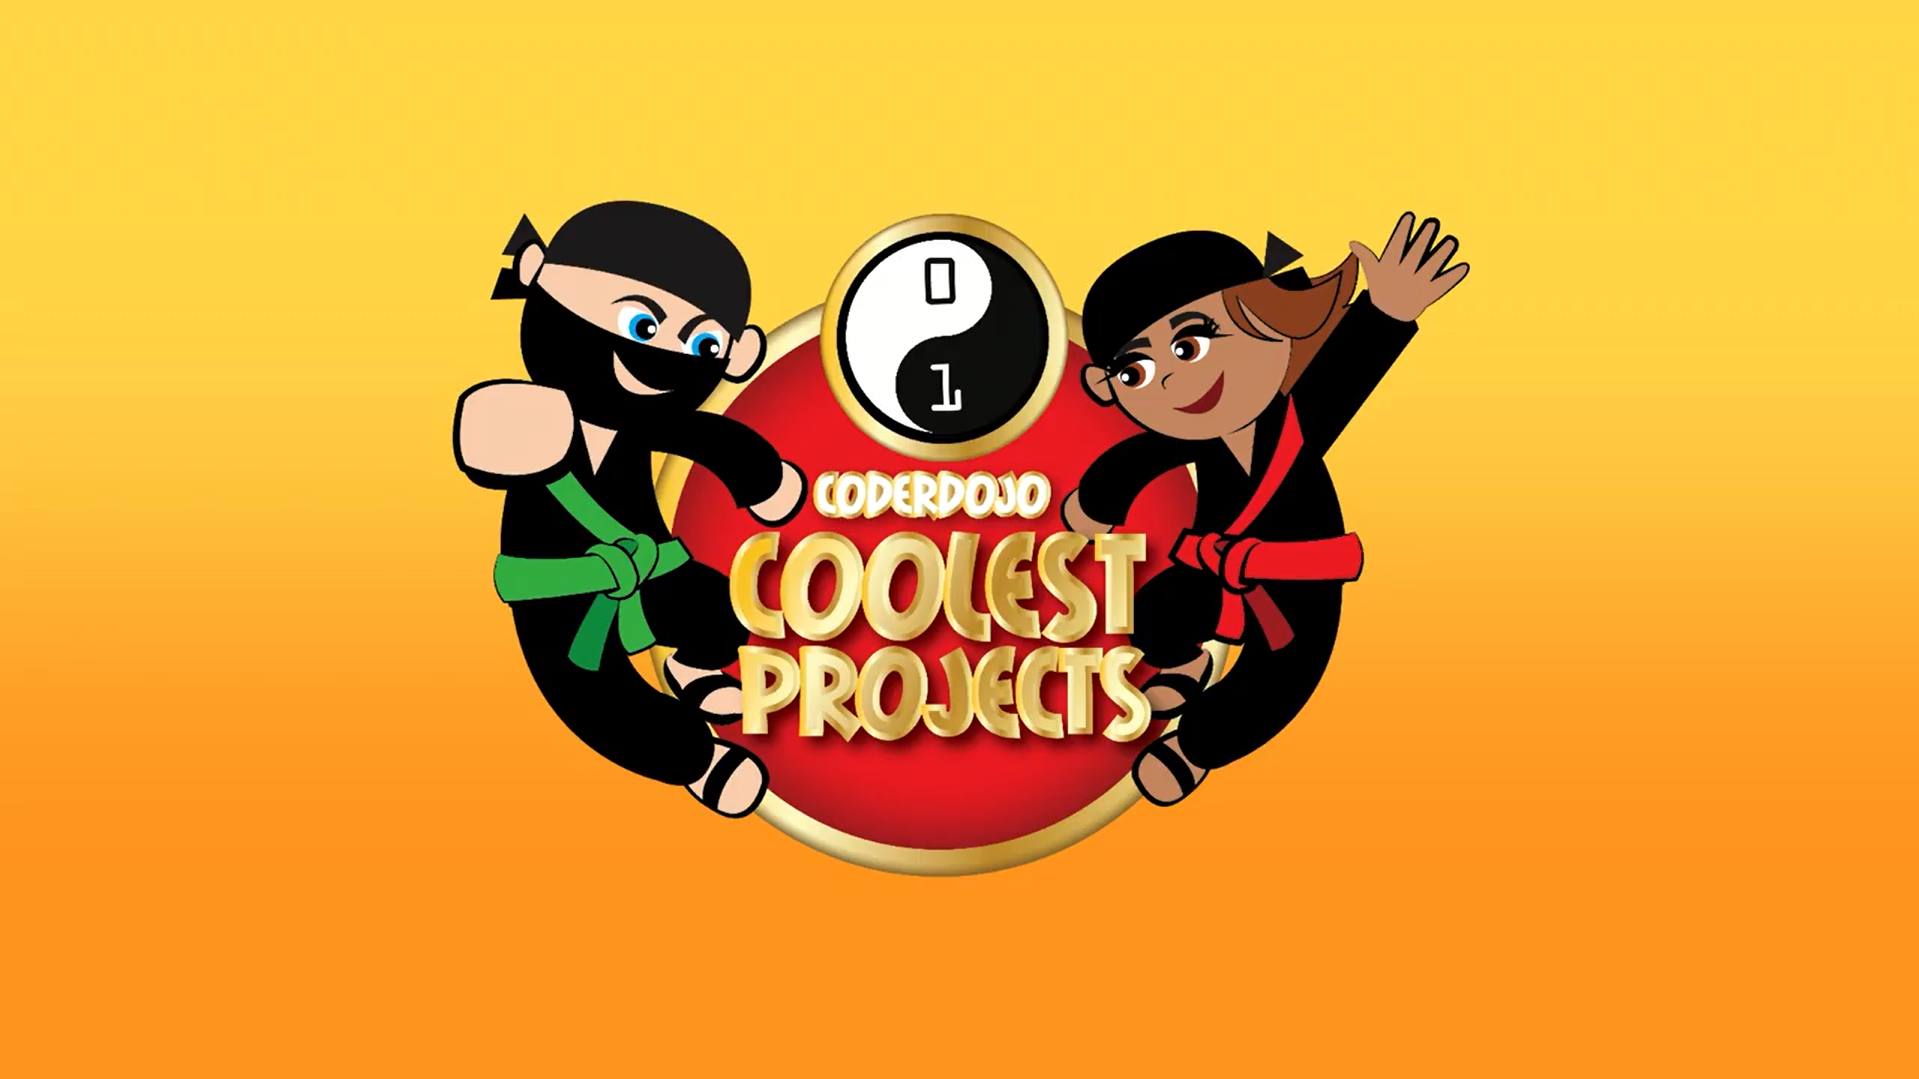 CoderDojo Coolest Project